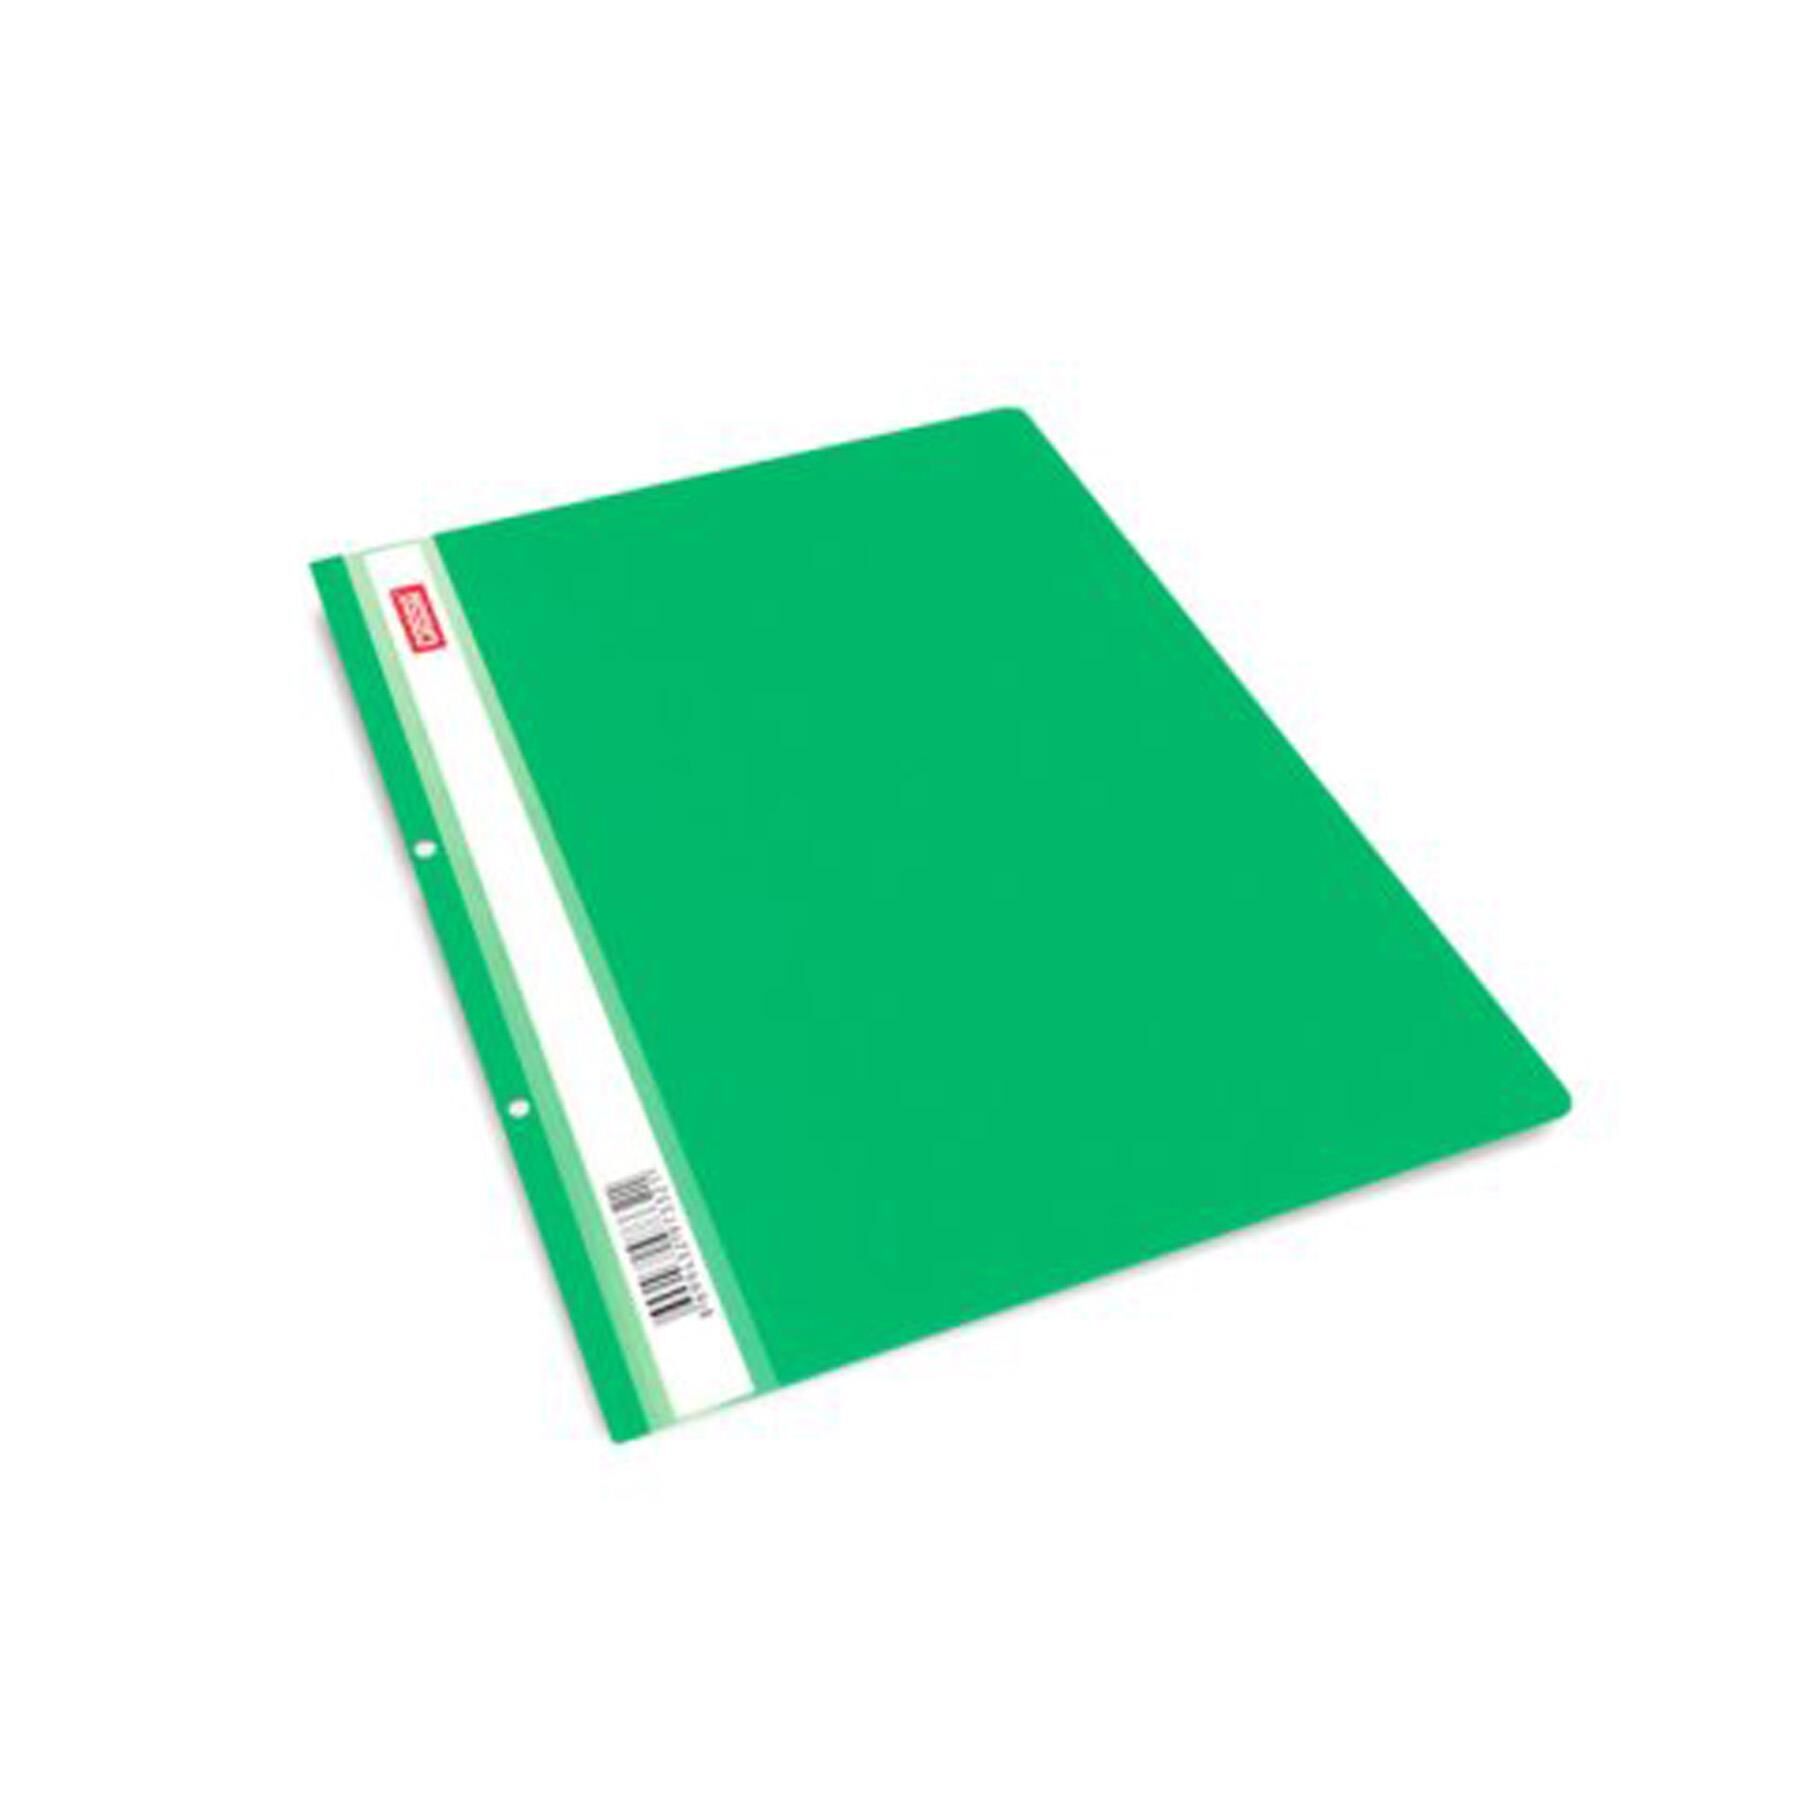 Cassa 7730 Yeşil Telli Dosya ( 1 Adet )